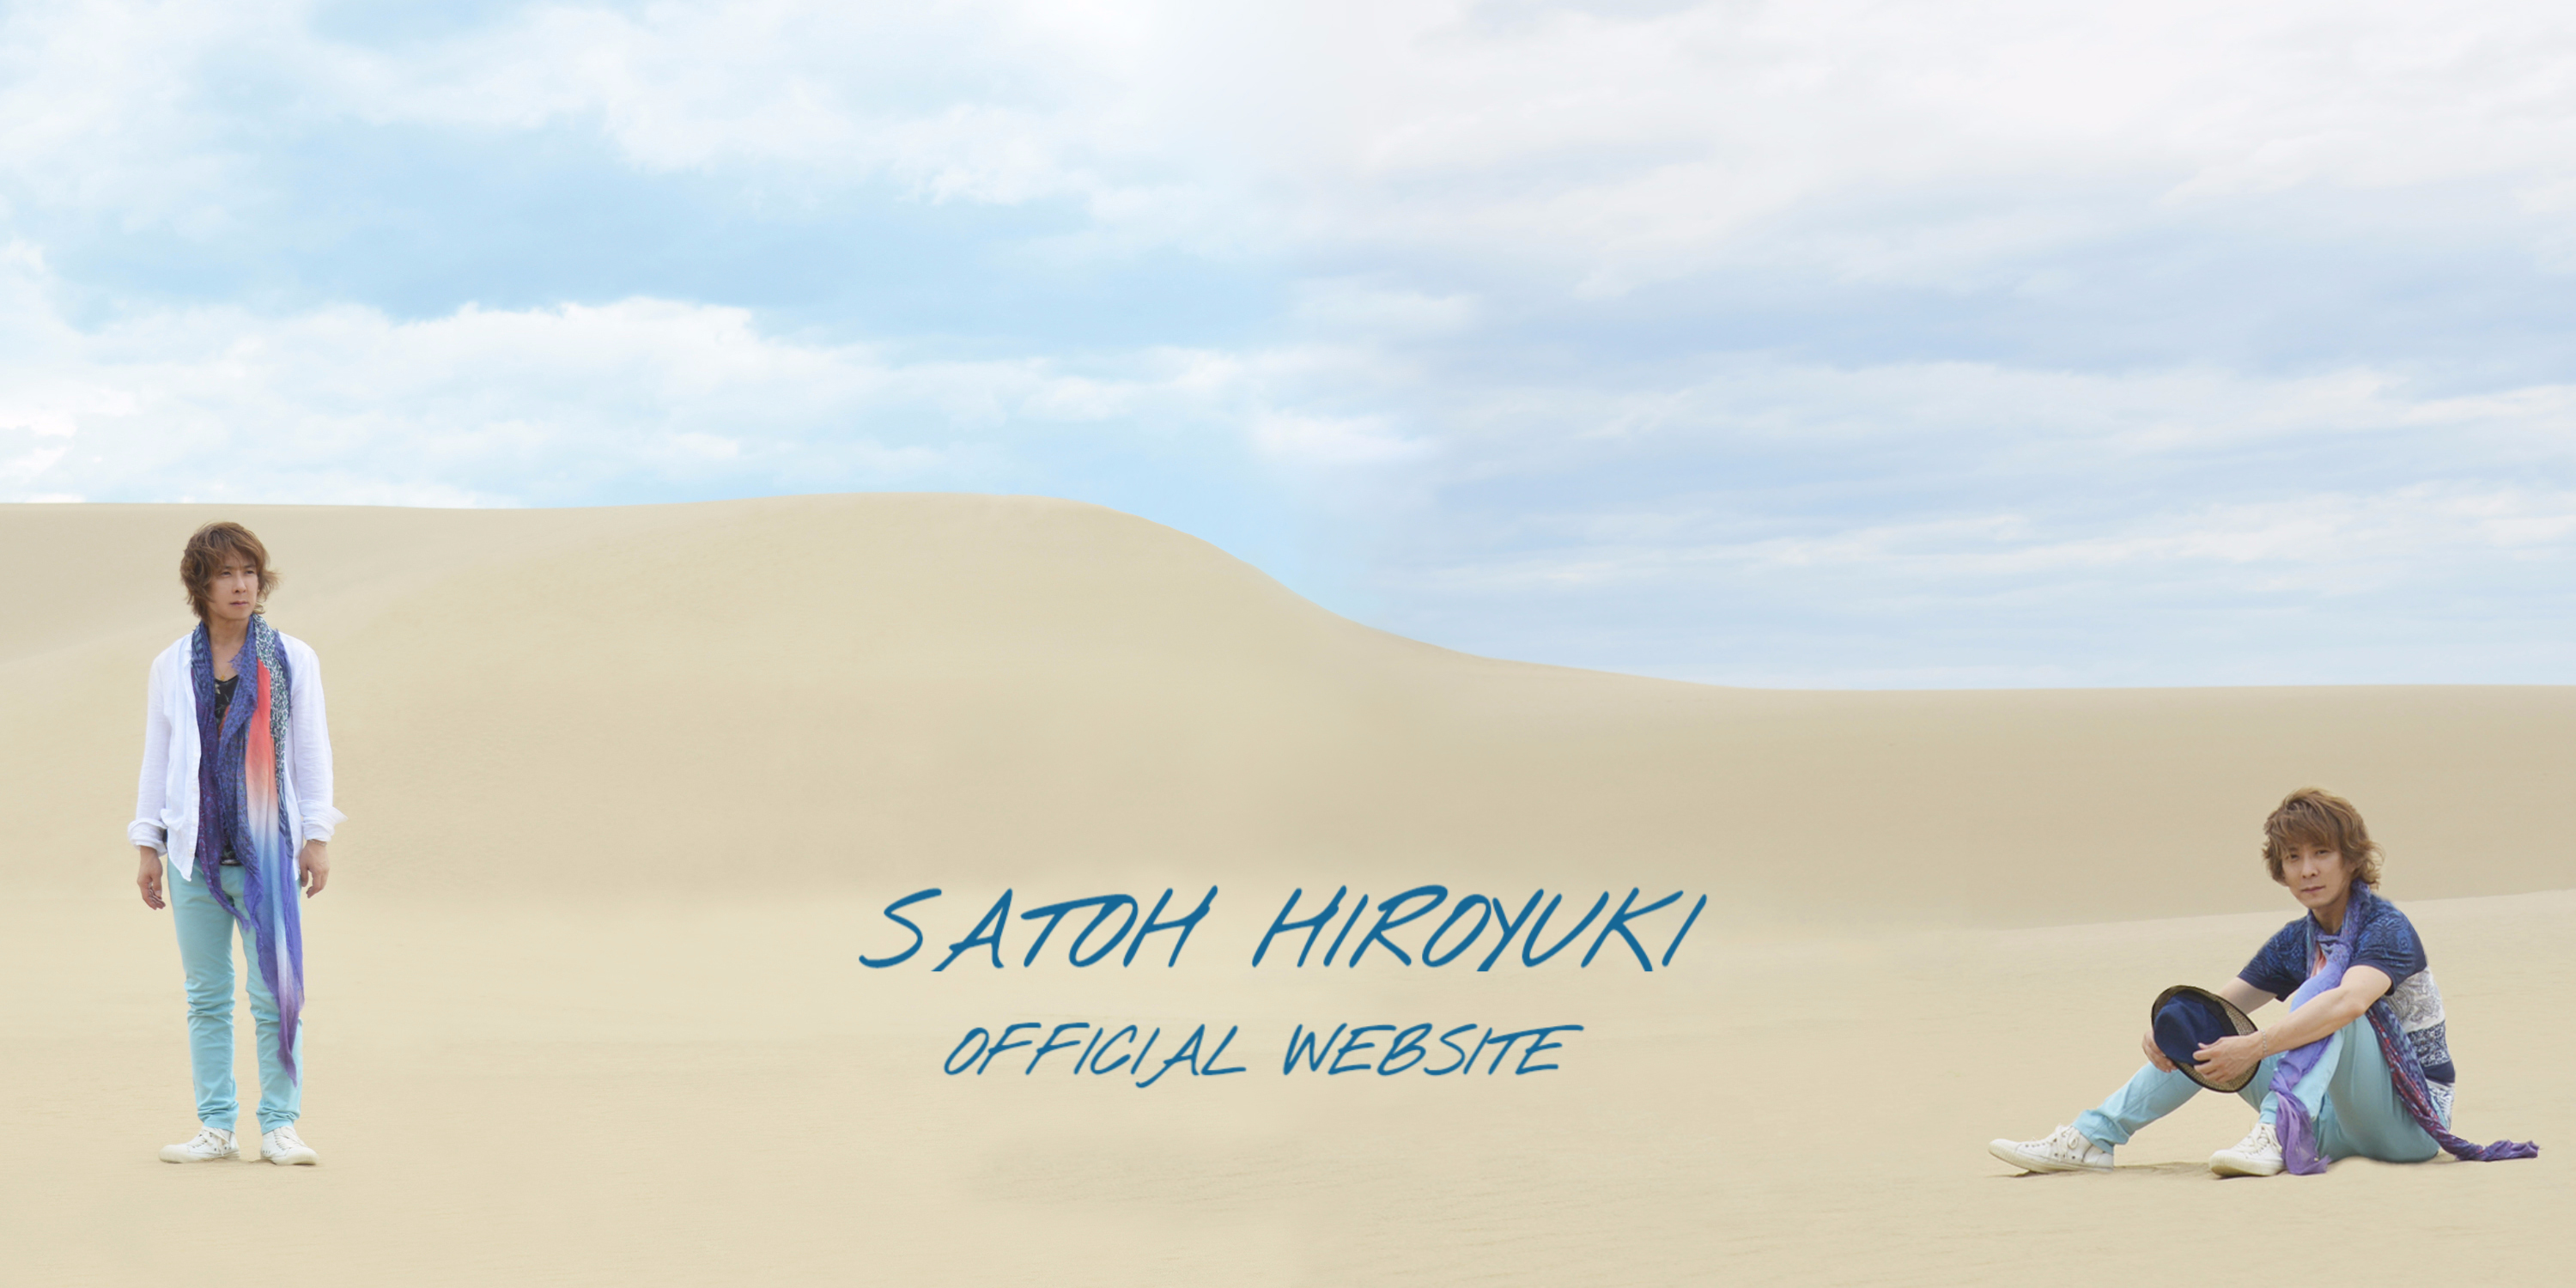 HOME of SATOH HIROYUKI OFFICIAL WEBSITE